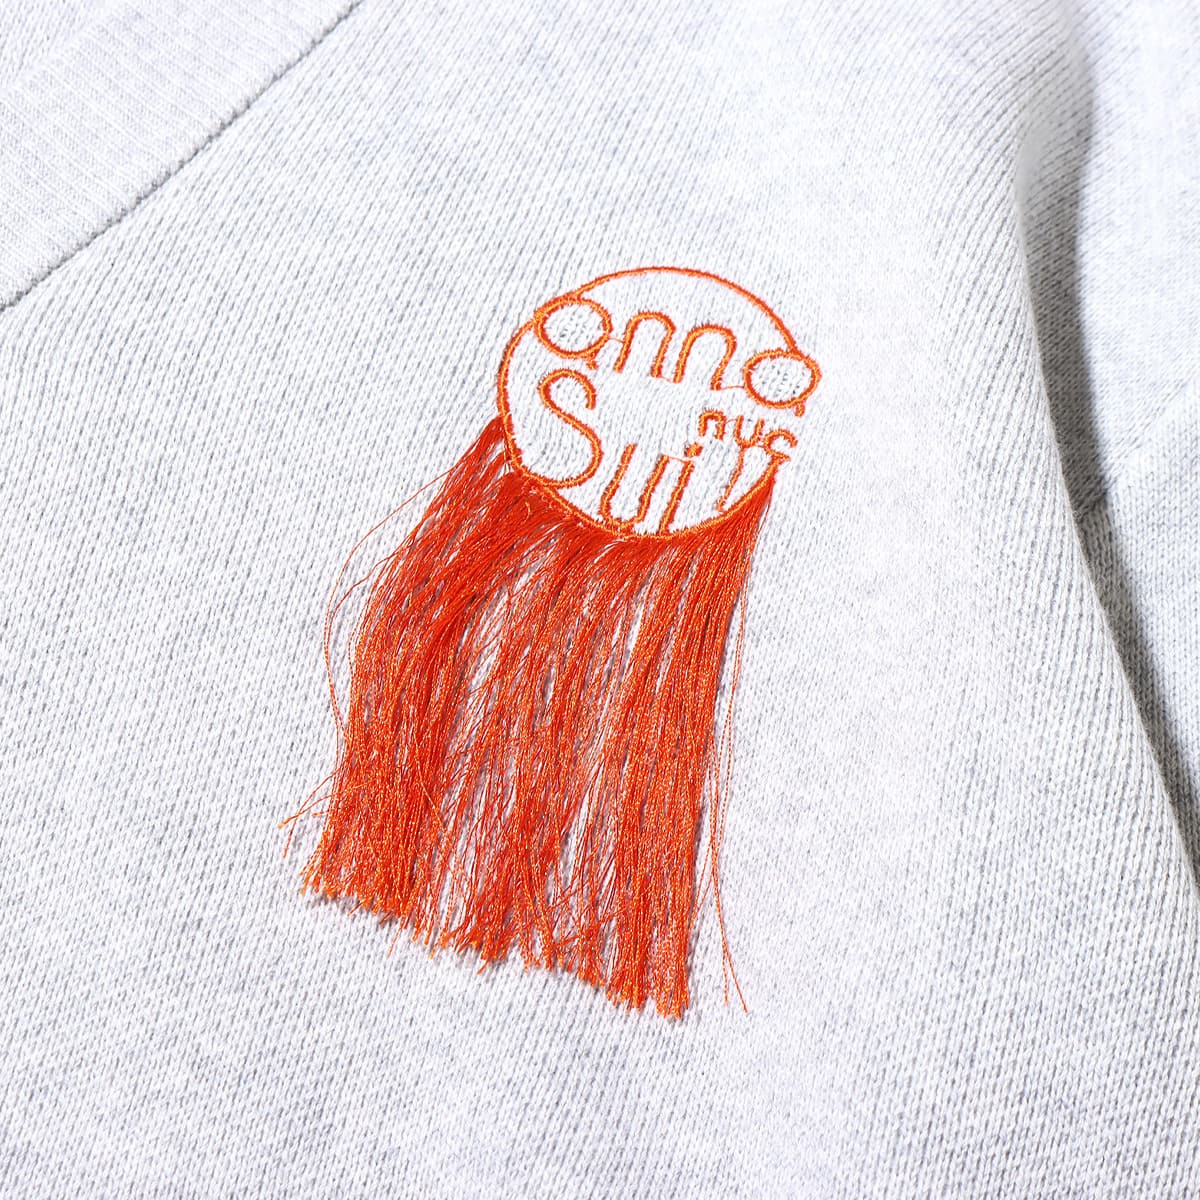 ANNA SUI NYC ロゴ刺繍 ドロップヤーン ニットカーデ GRAY 22FA-I